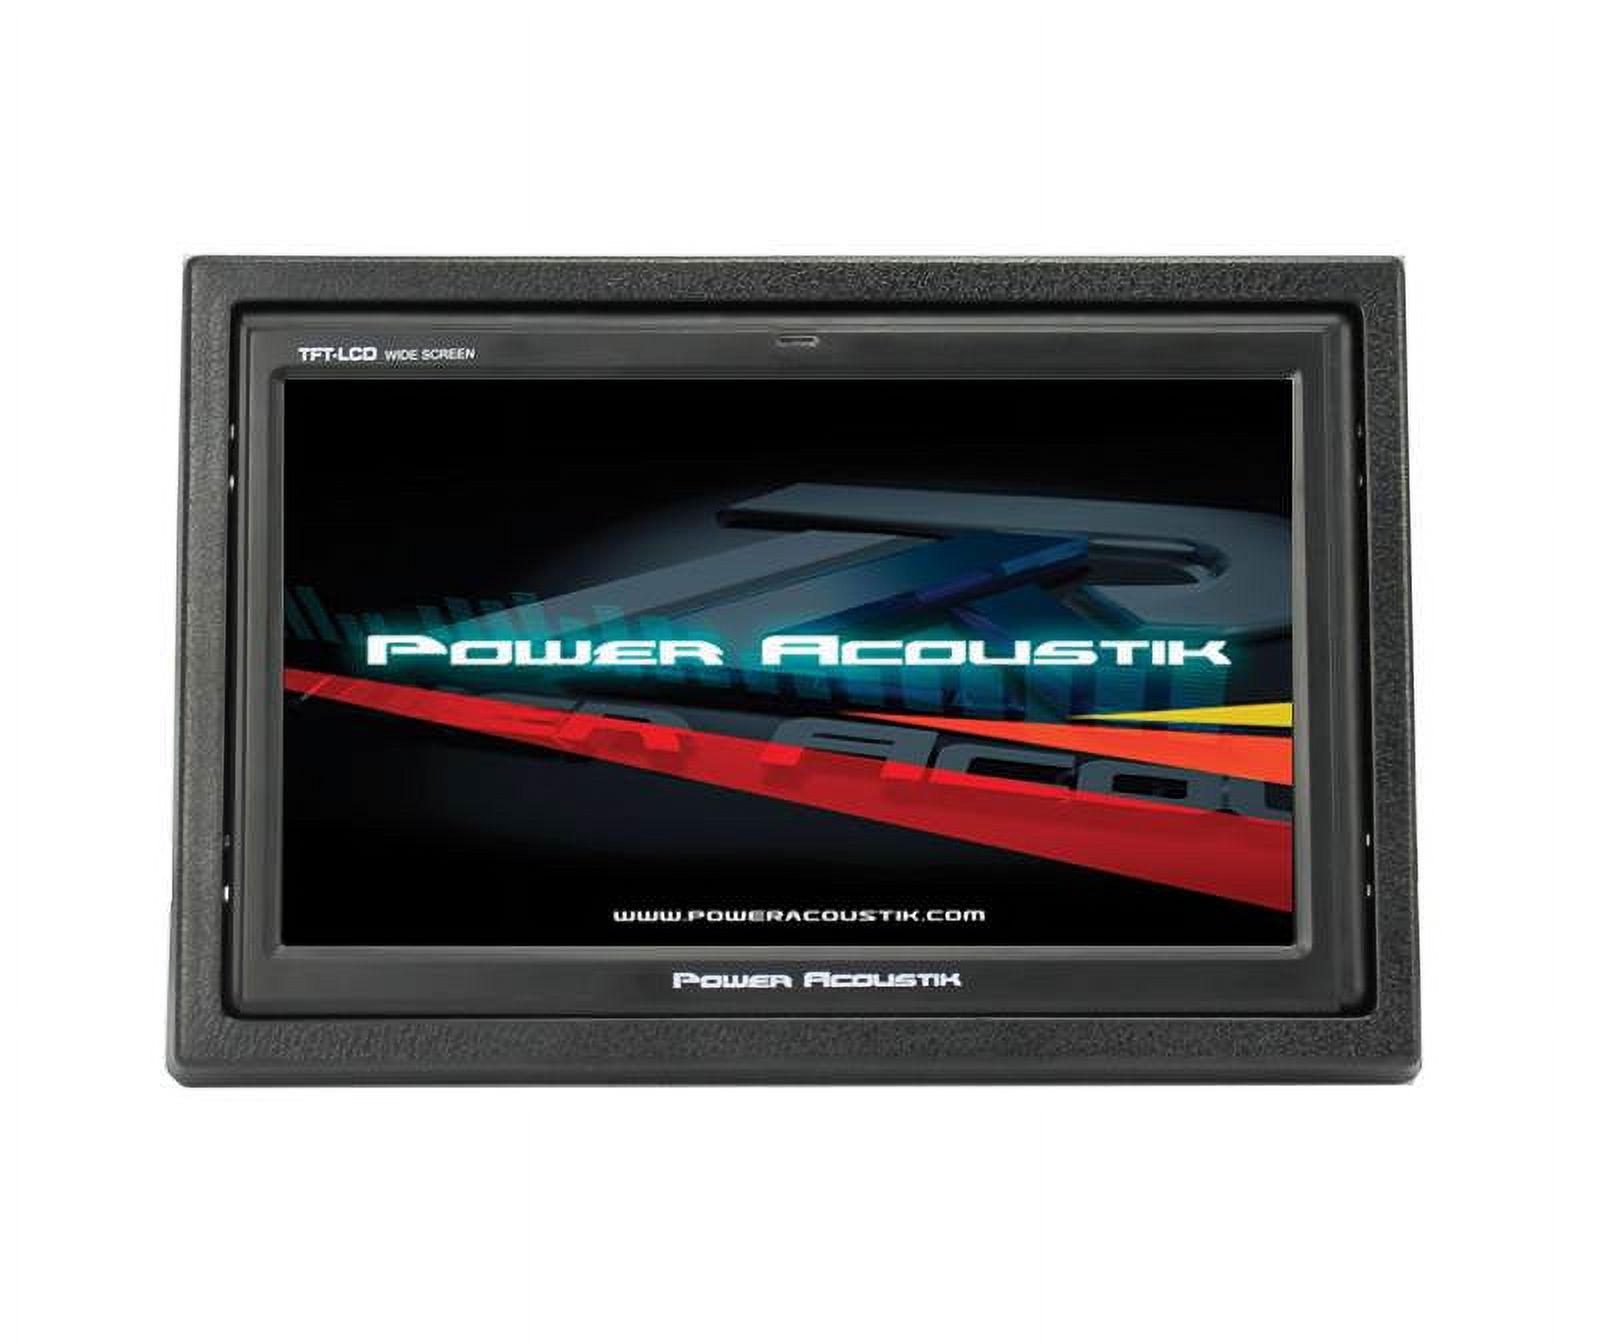 NEW POWER ACOUSTIK PT-700MHR 7" LCD TFT Car Audio Headrest Monitor PT700MHR - image 2 of 3